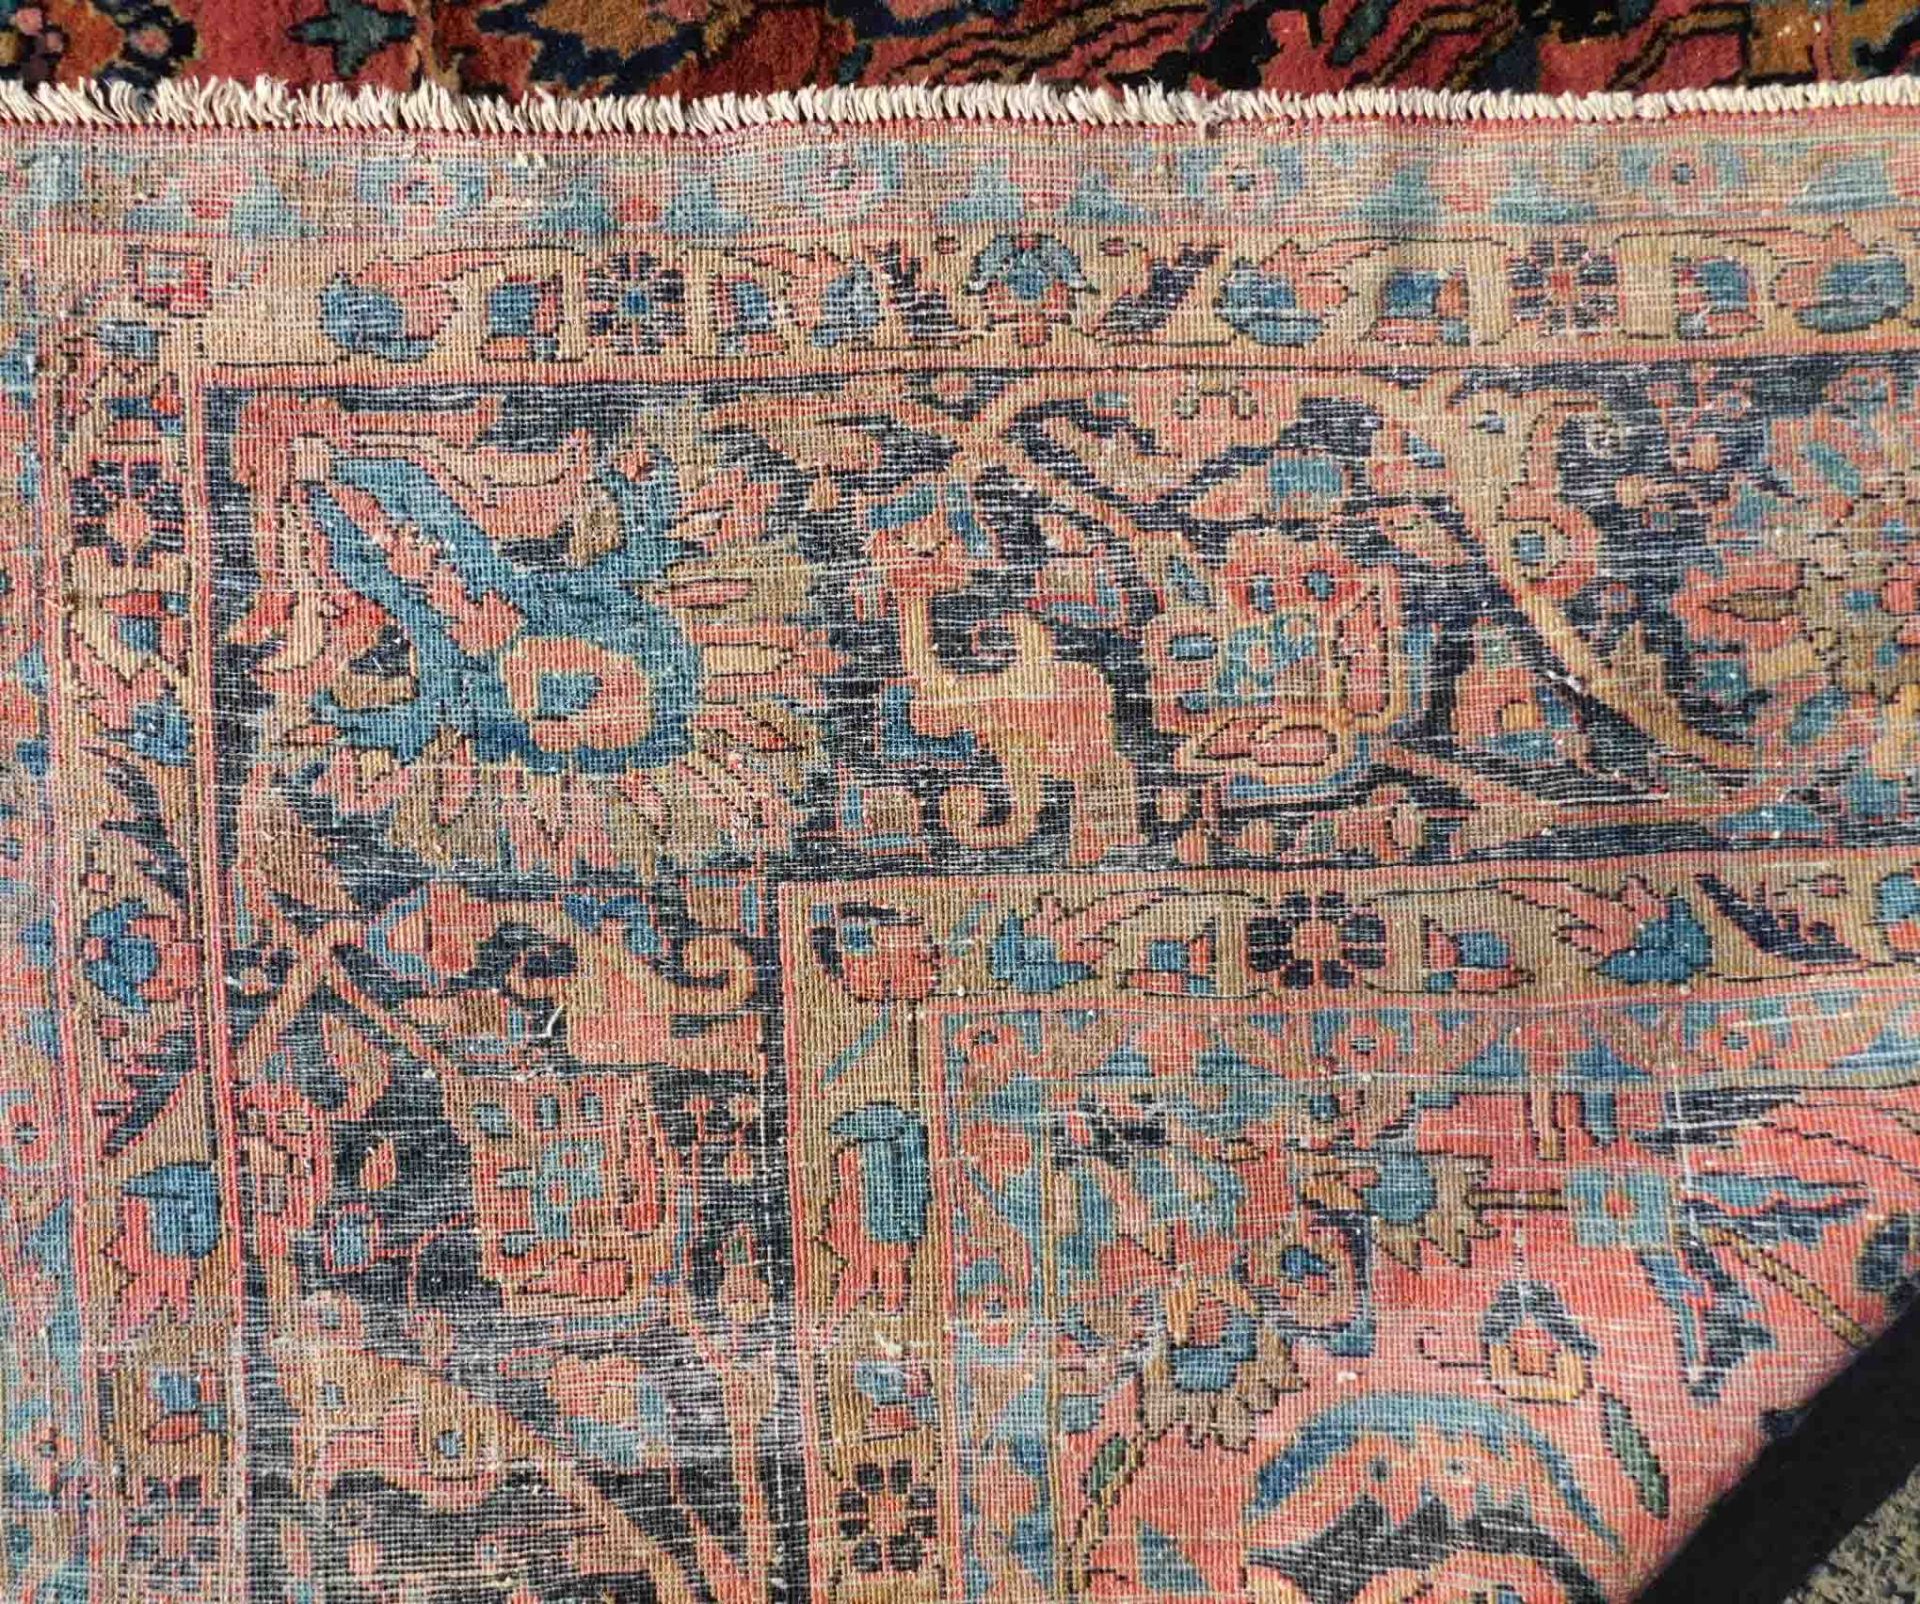 Saruk Persian carpet. "American Saruk". Iran. About 100 years old. - Image 11 of 20